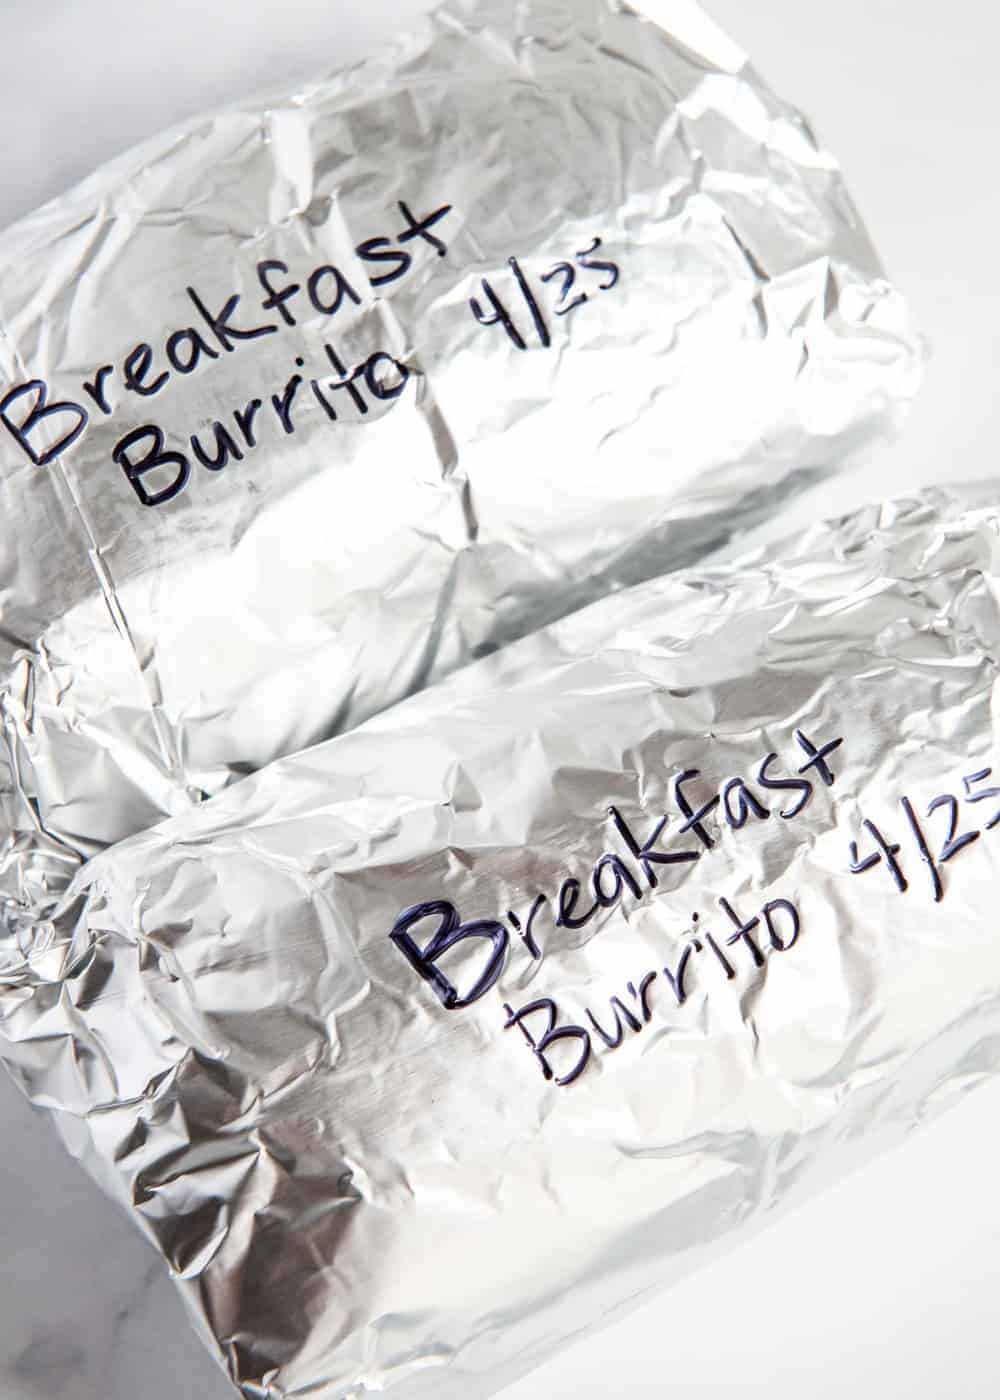 Freezer breakfast burritos.